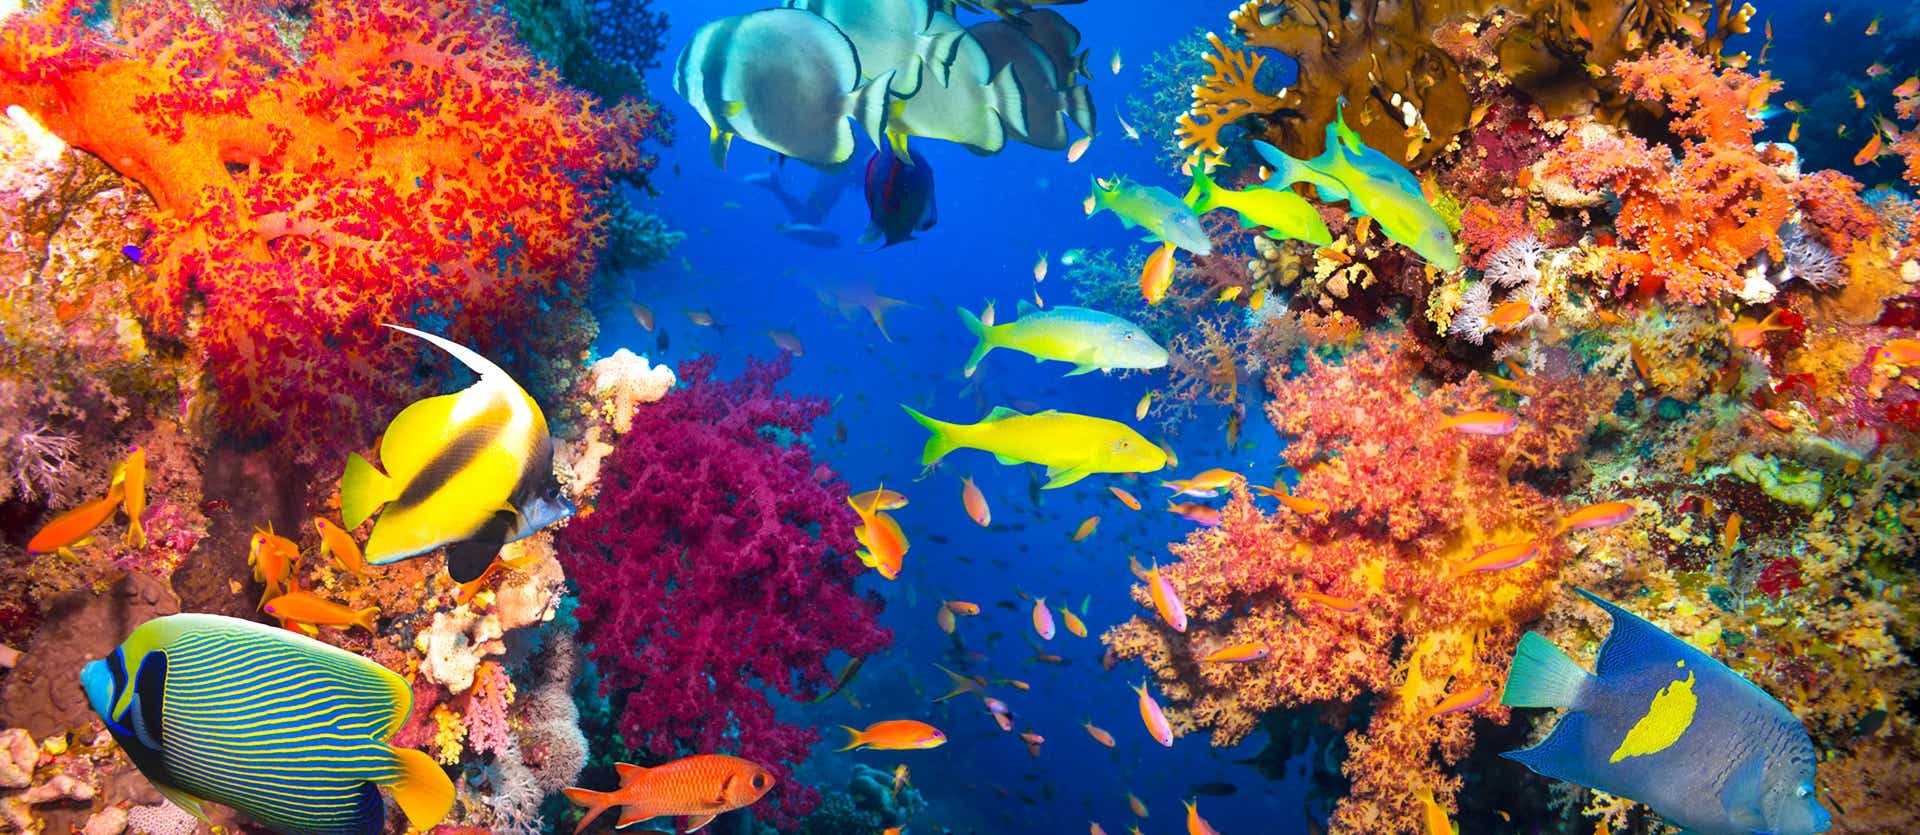 Korallenriff und tropische Fische <span class="iconos separador"></span> Punta Cana